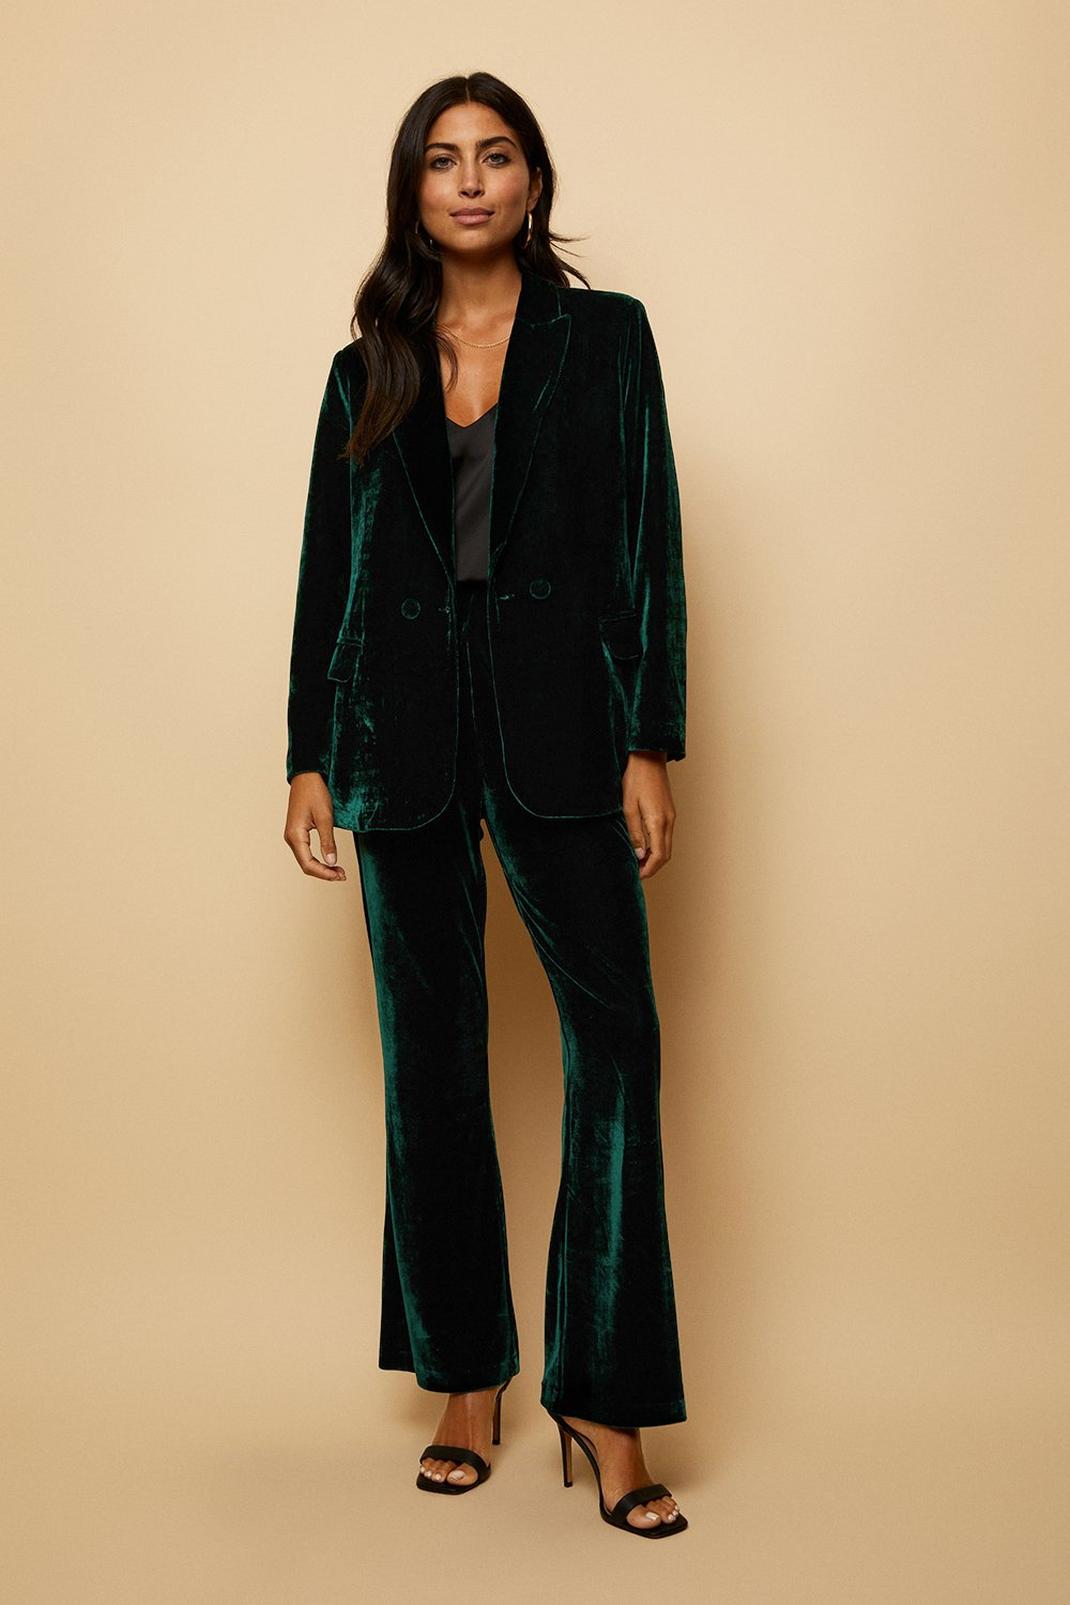 Petite Green Velvet Suit, 45% OFF